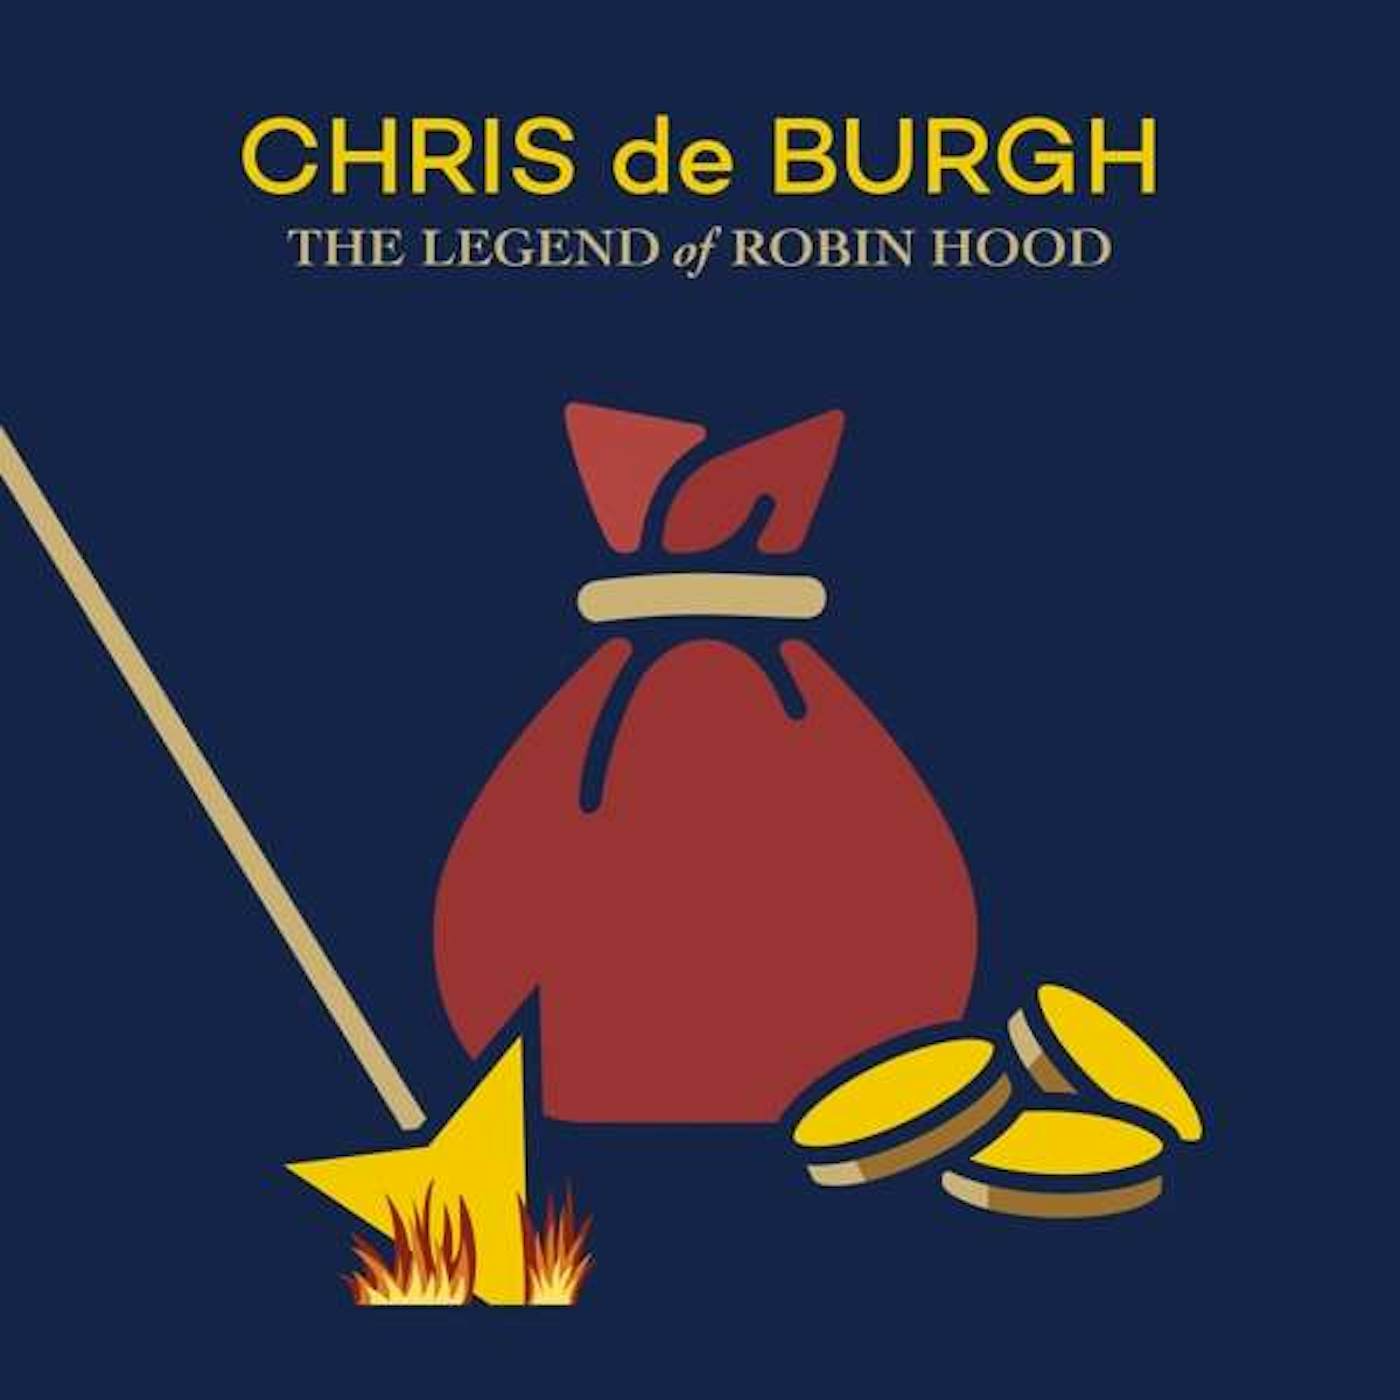 Chris de Burgh LEGEND OF ROBIN HOOD CD